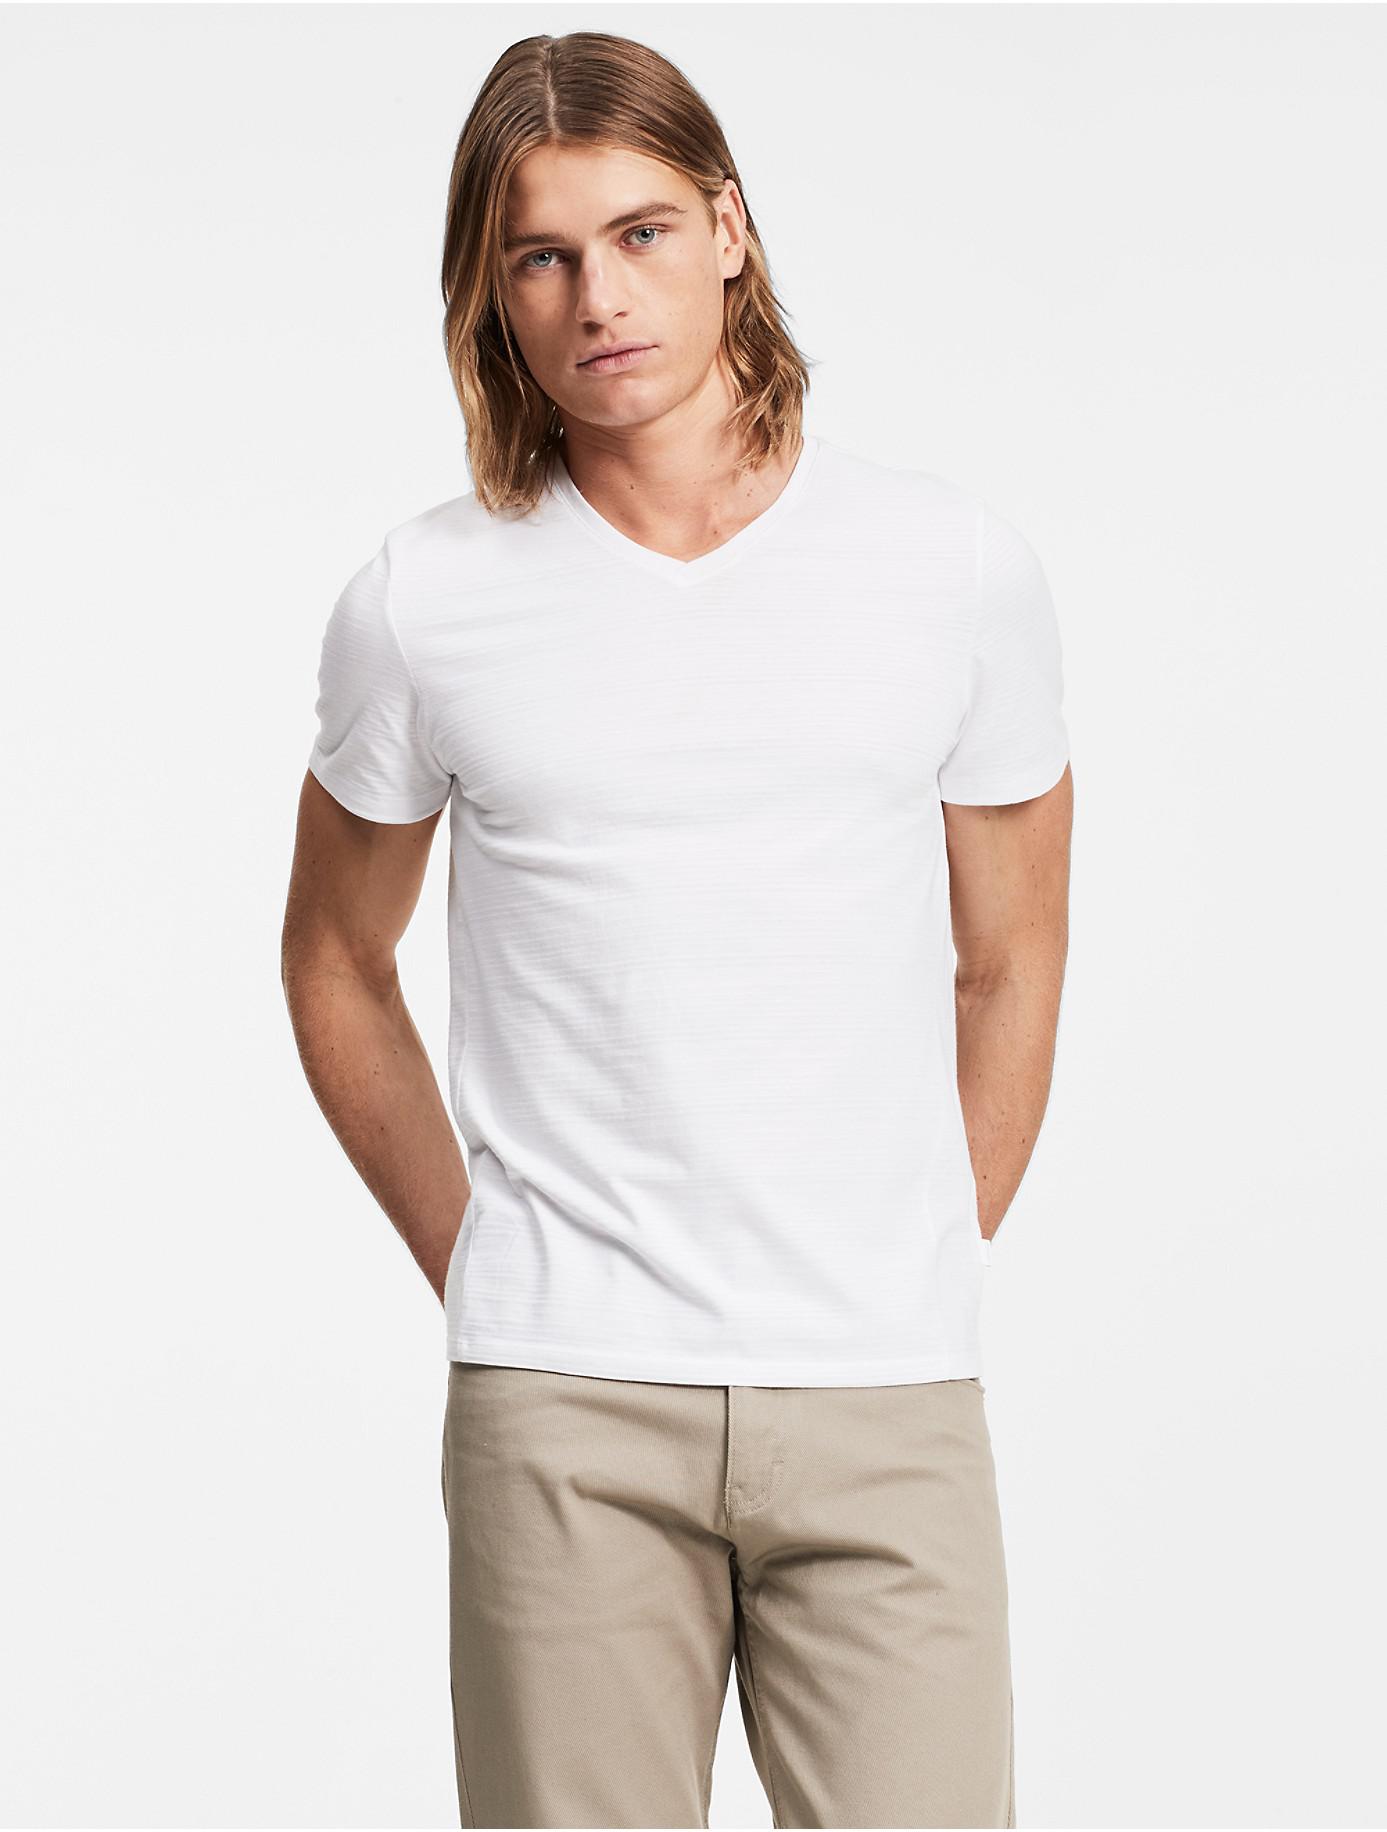 Calvin Klein Cotton Slim Fit Textured V-neck T-shirt in White for Men